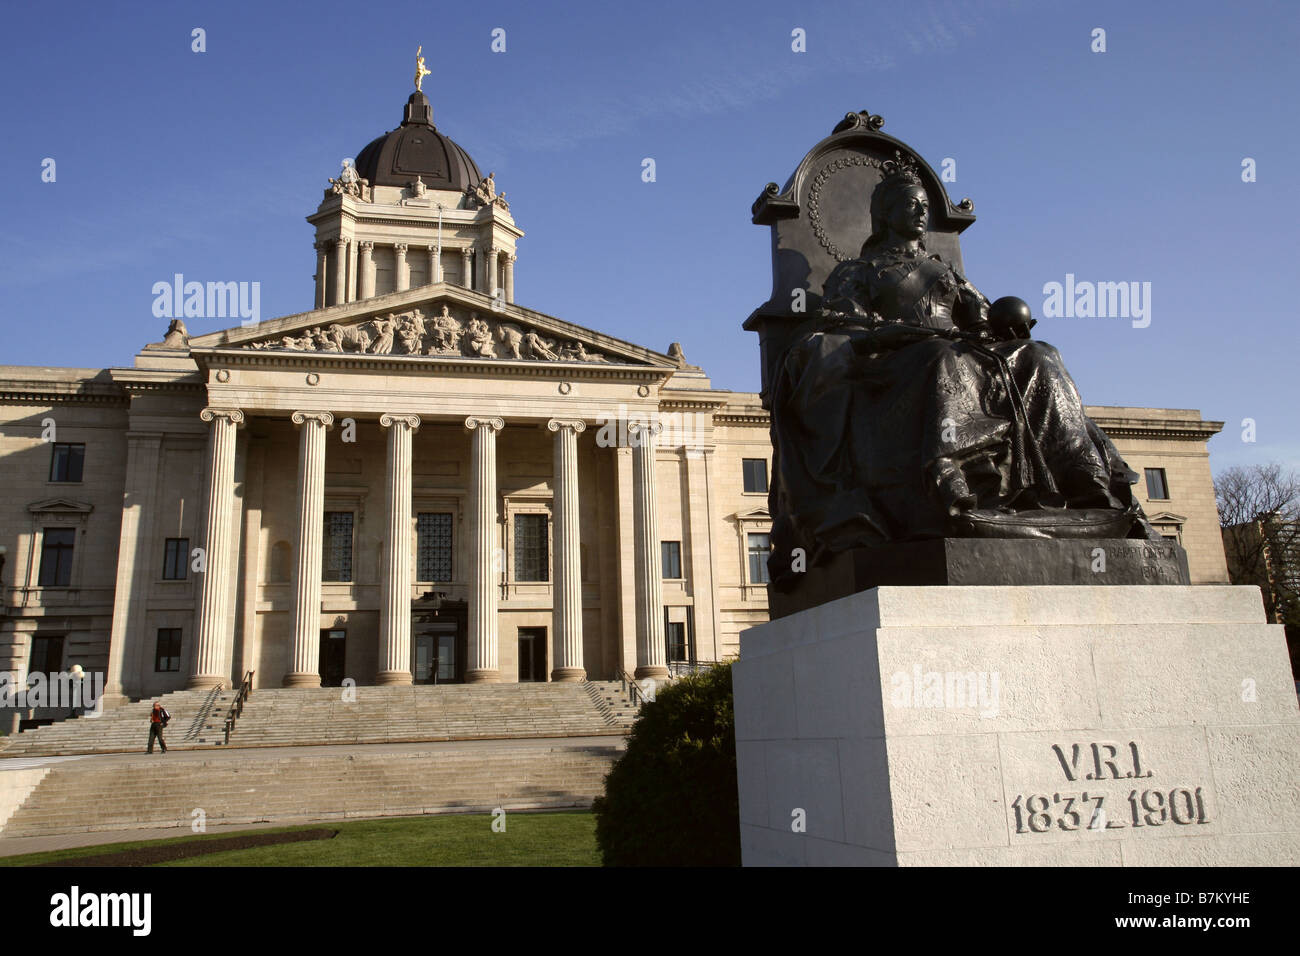 Statue de la reine Victoria et l'Édifice de l'Assemblée législative du Manitoba, Winnipeg, Manitoba, Canada Banque D'Images